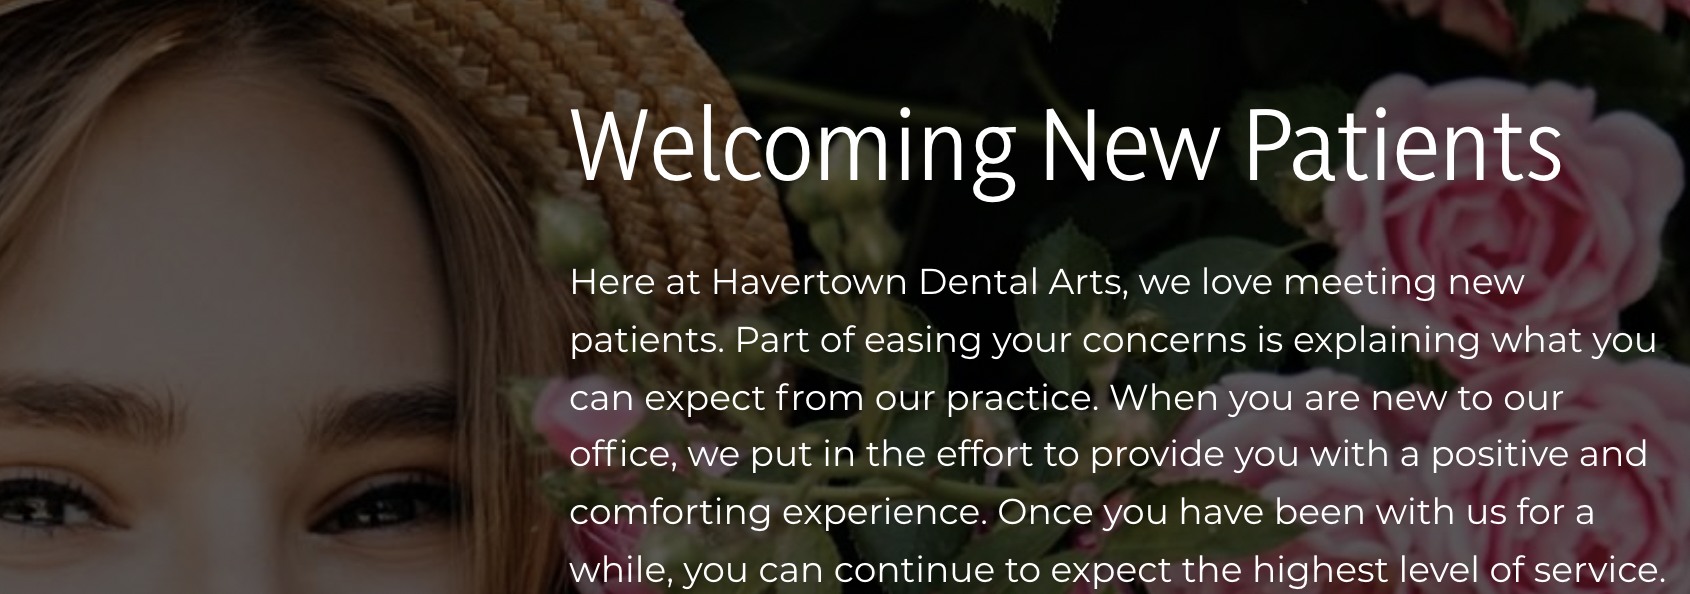 Havertown Dental Arts banner